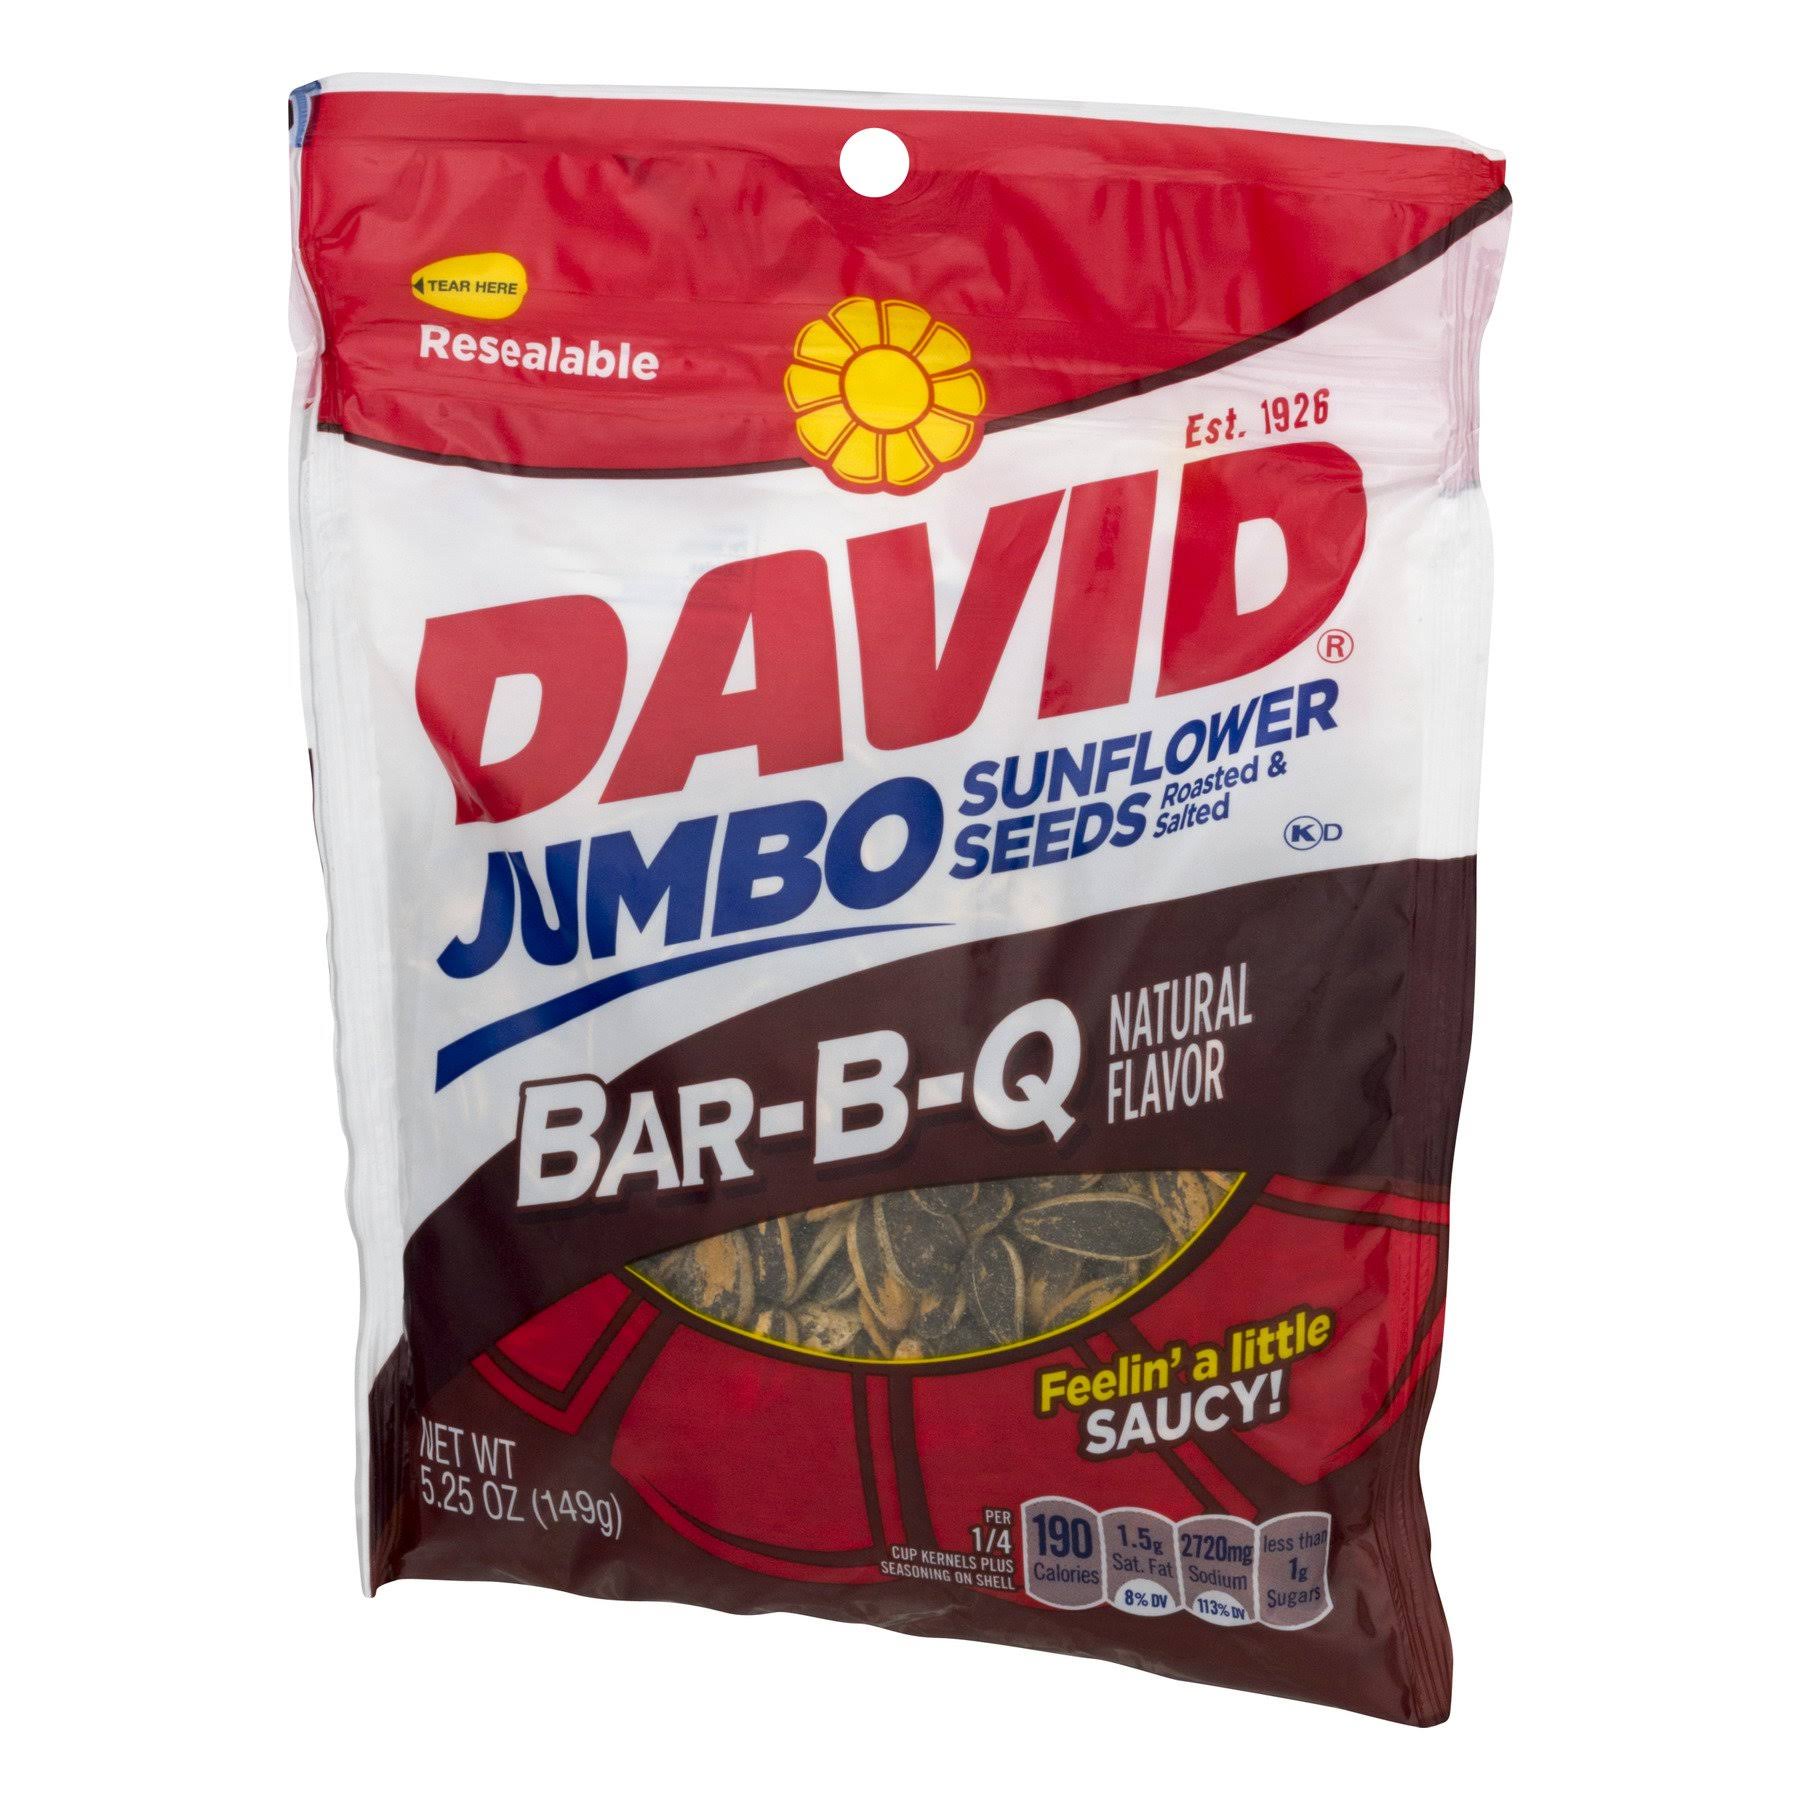 David Seeds Jumbo Sunflower Seeds - Barbeque Flavor, 5.25oz